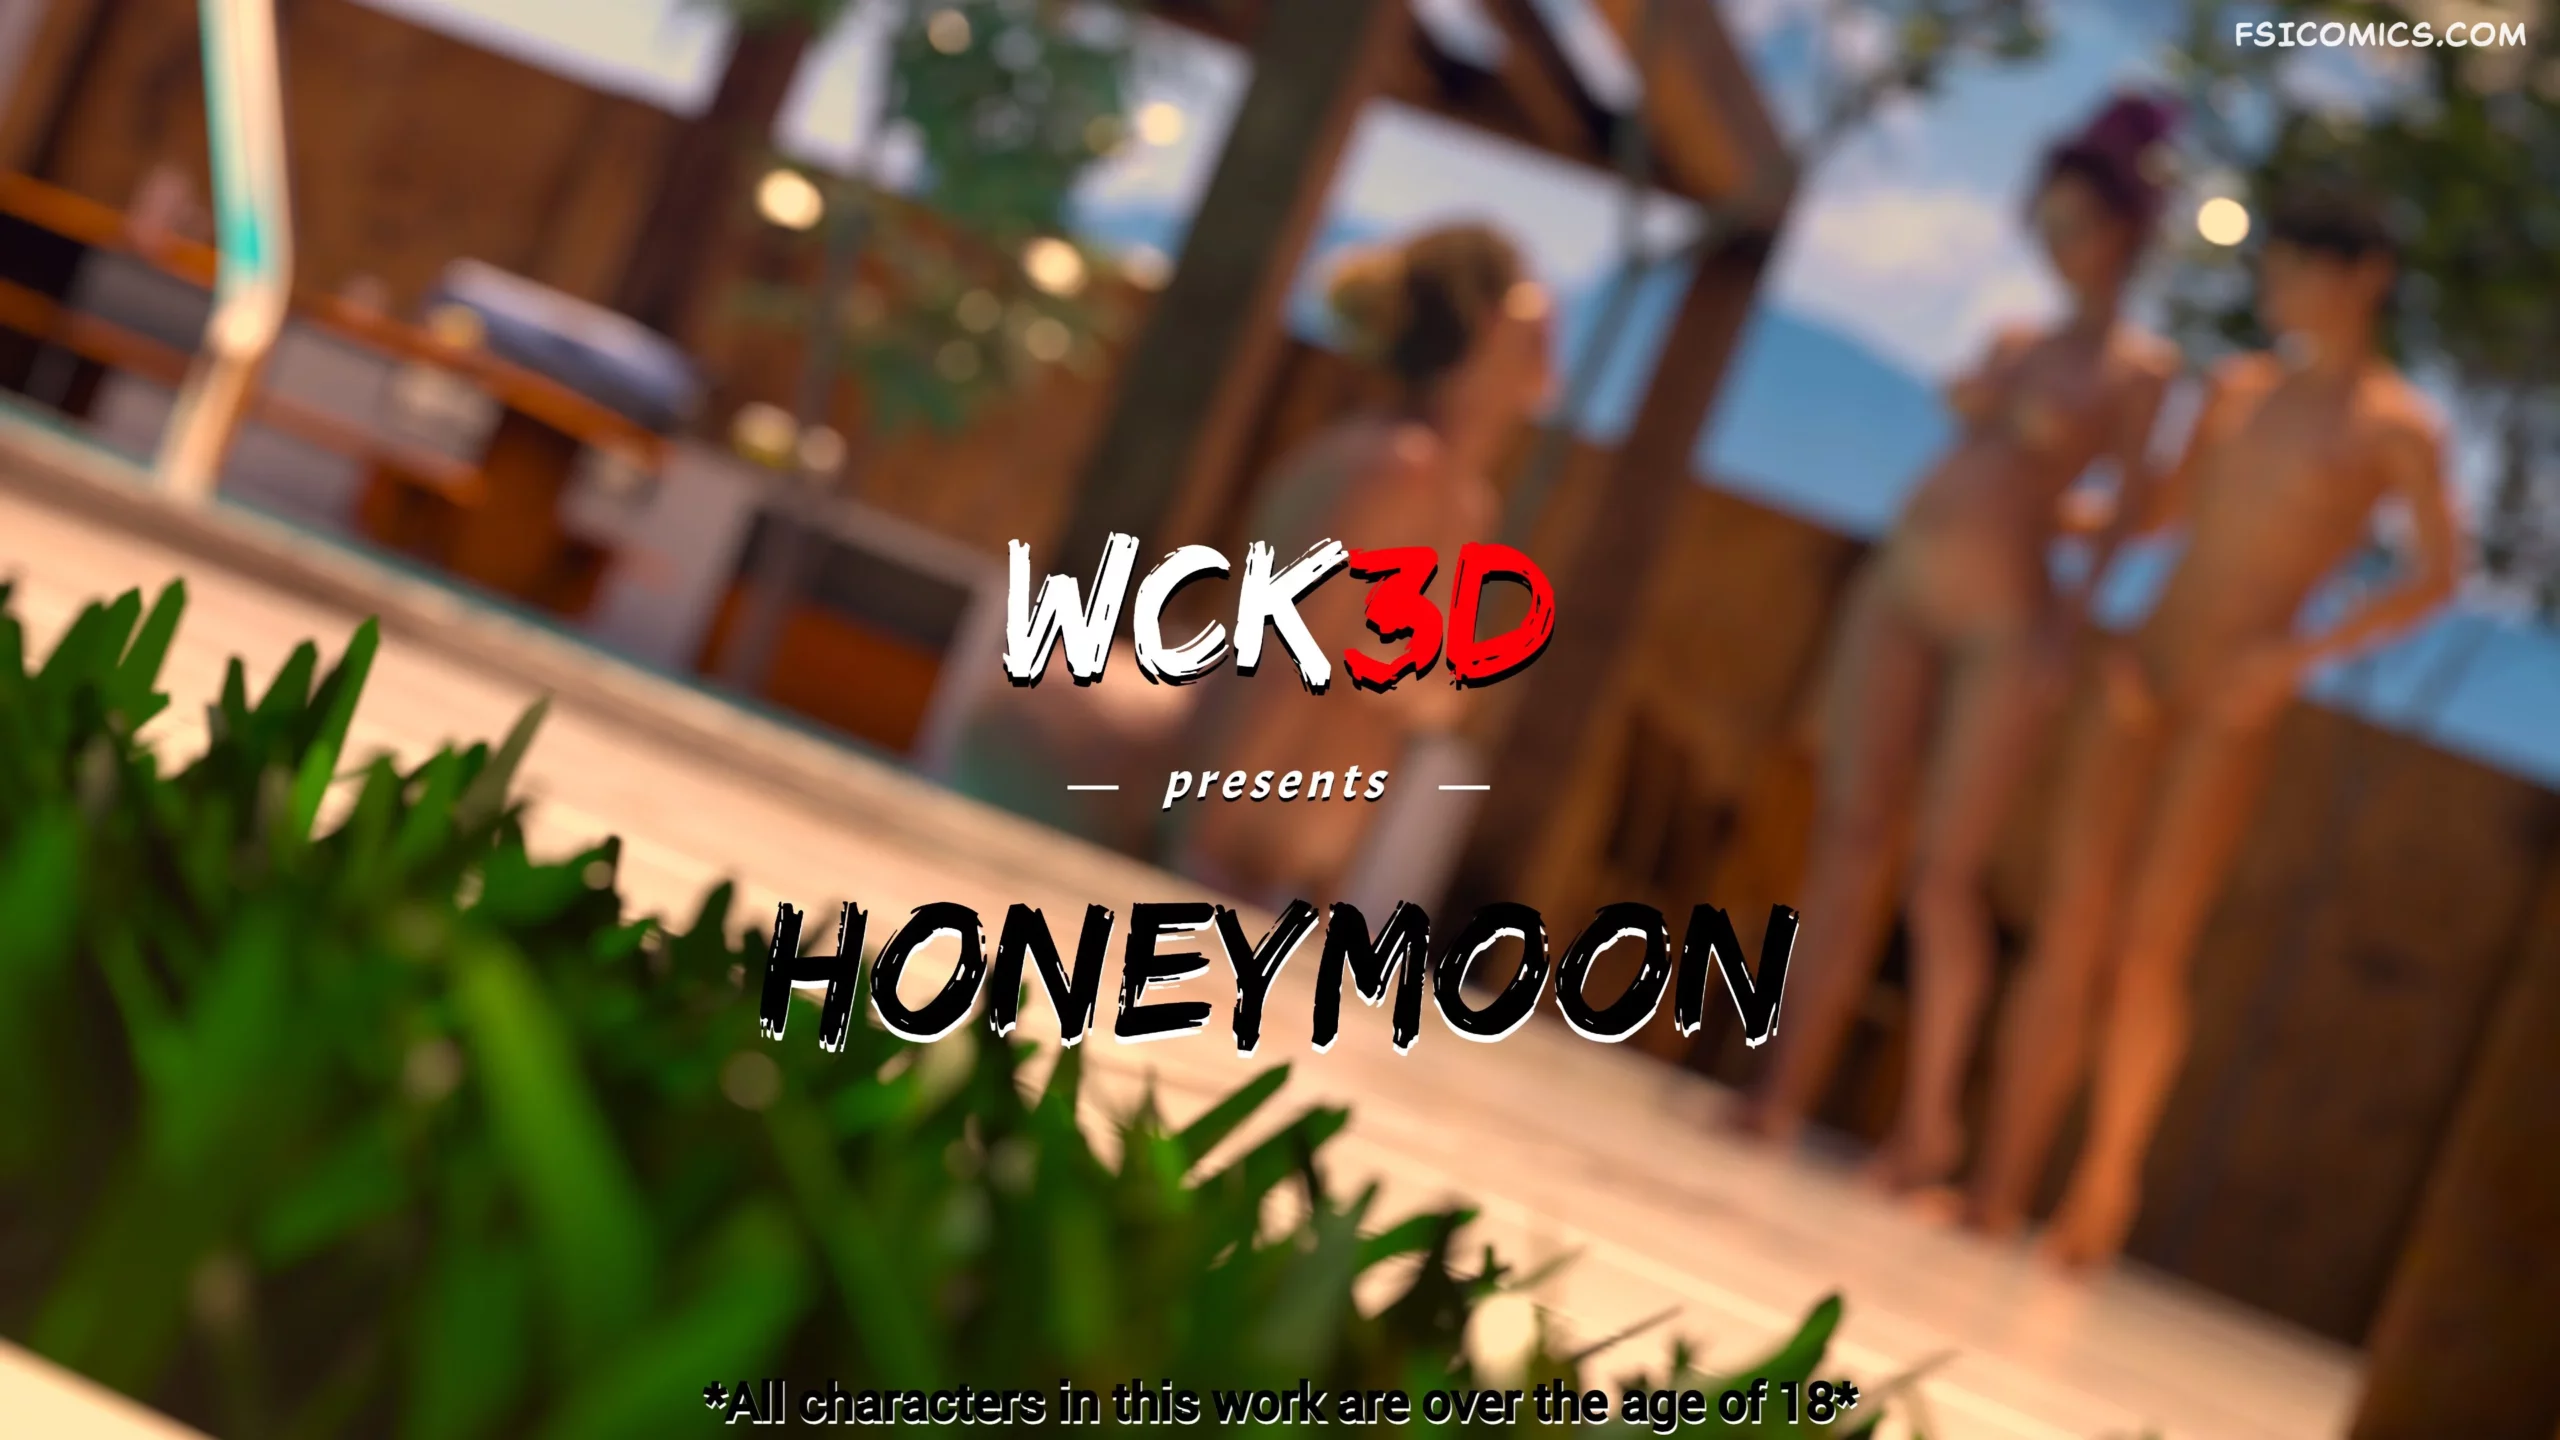 Between Us - Honeymoon - WCK3D - 223 - FSIComics